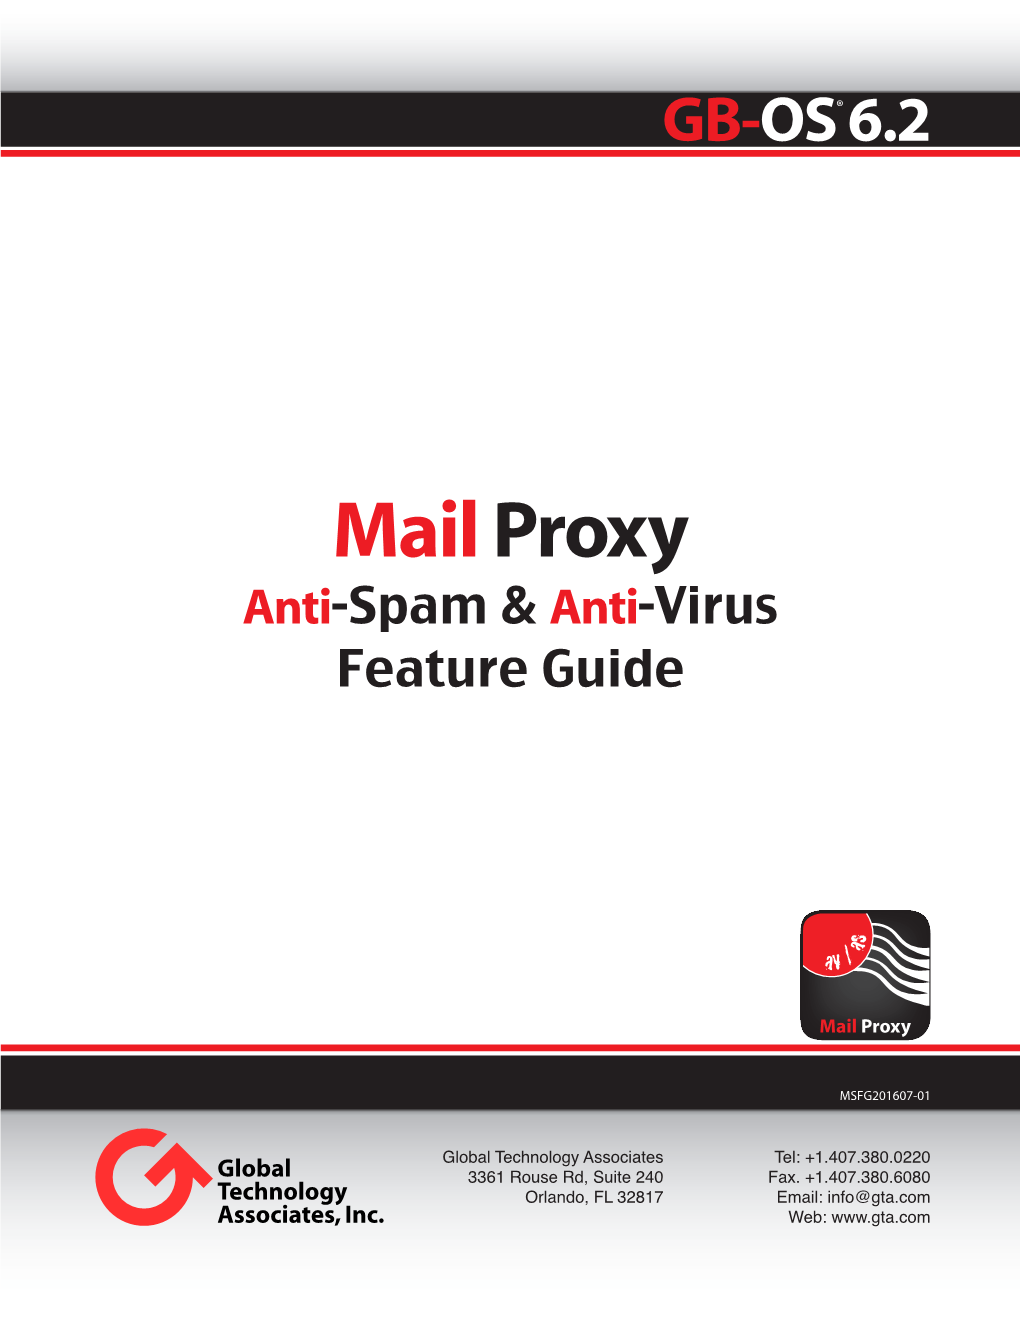 Mail Proxy Anti-Spam & Anti-Virus Feature Guide